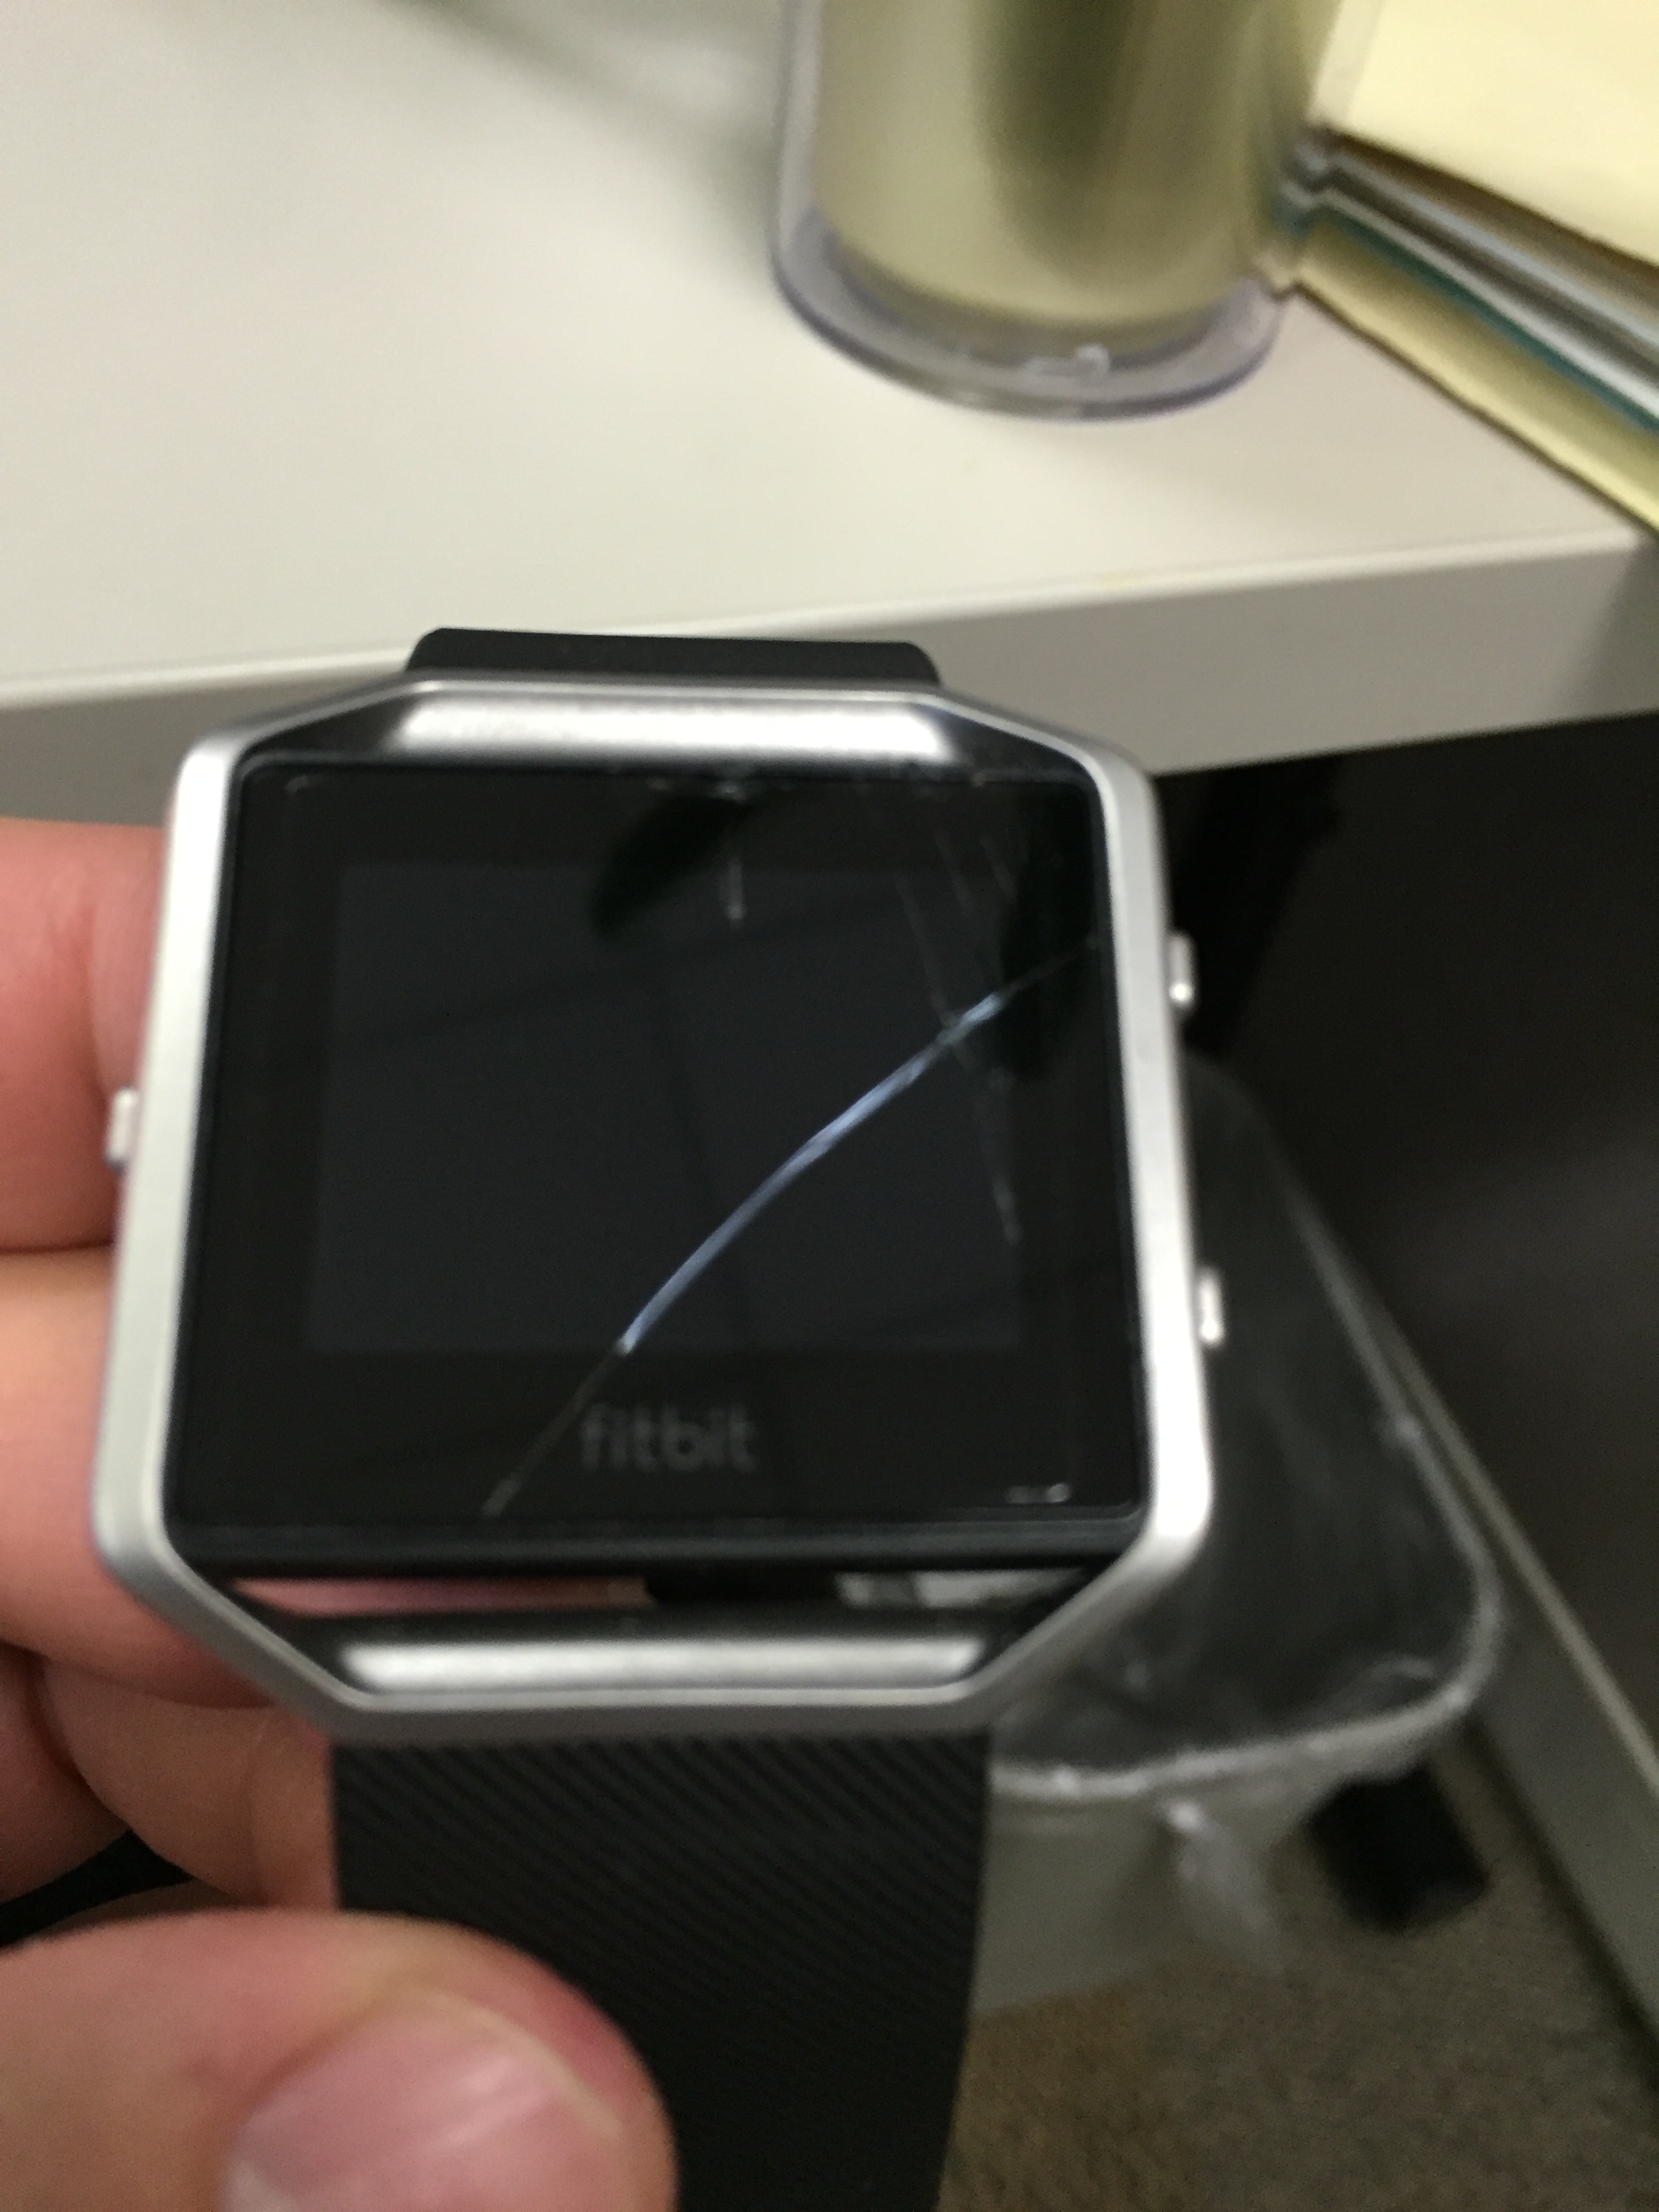 Solved: Blaze damaged screen - Fitbit 